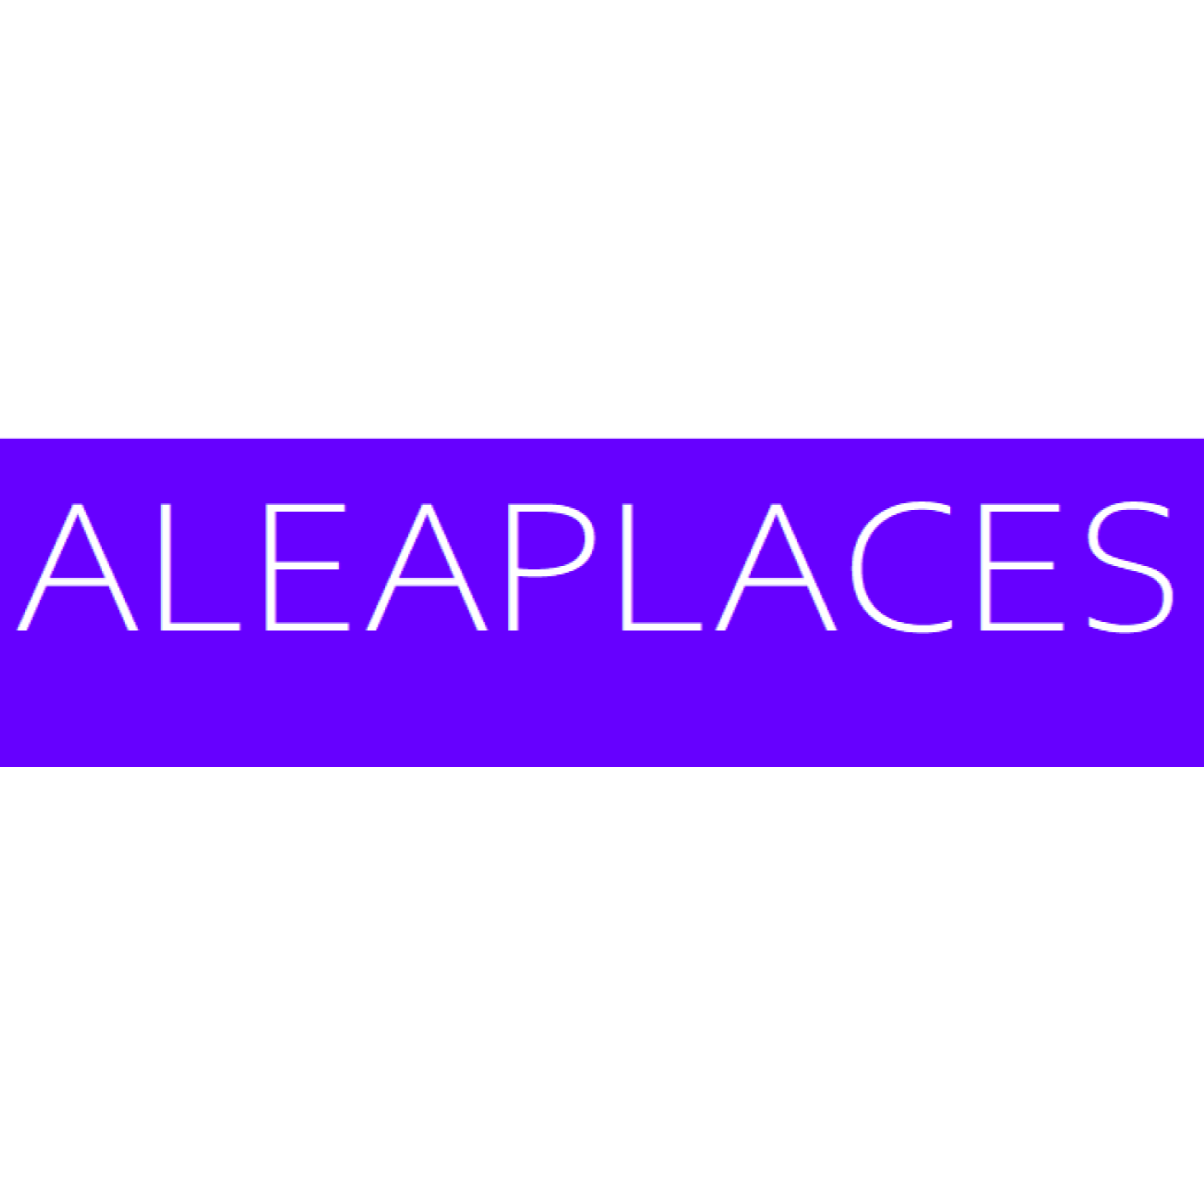 Aleaplaces Logo